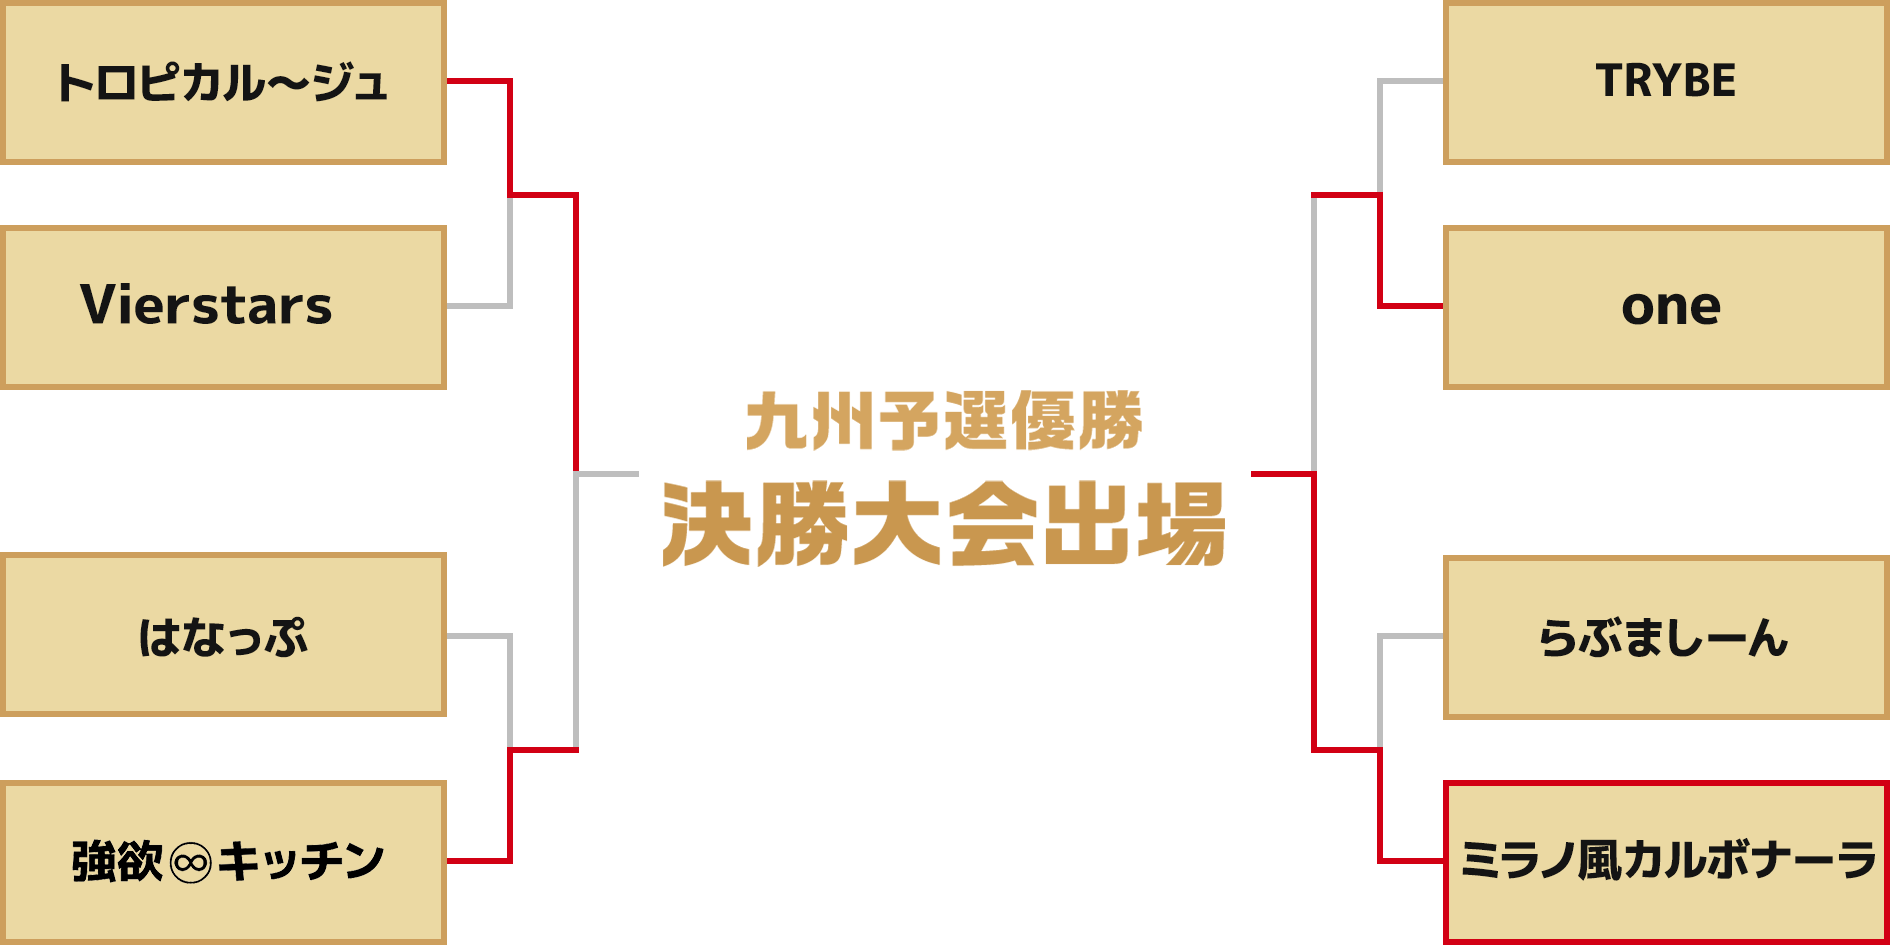 Regionals モンストグランプリ21 ジャパンチャンピオンシップ